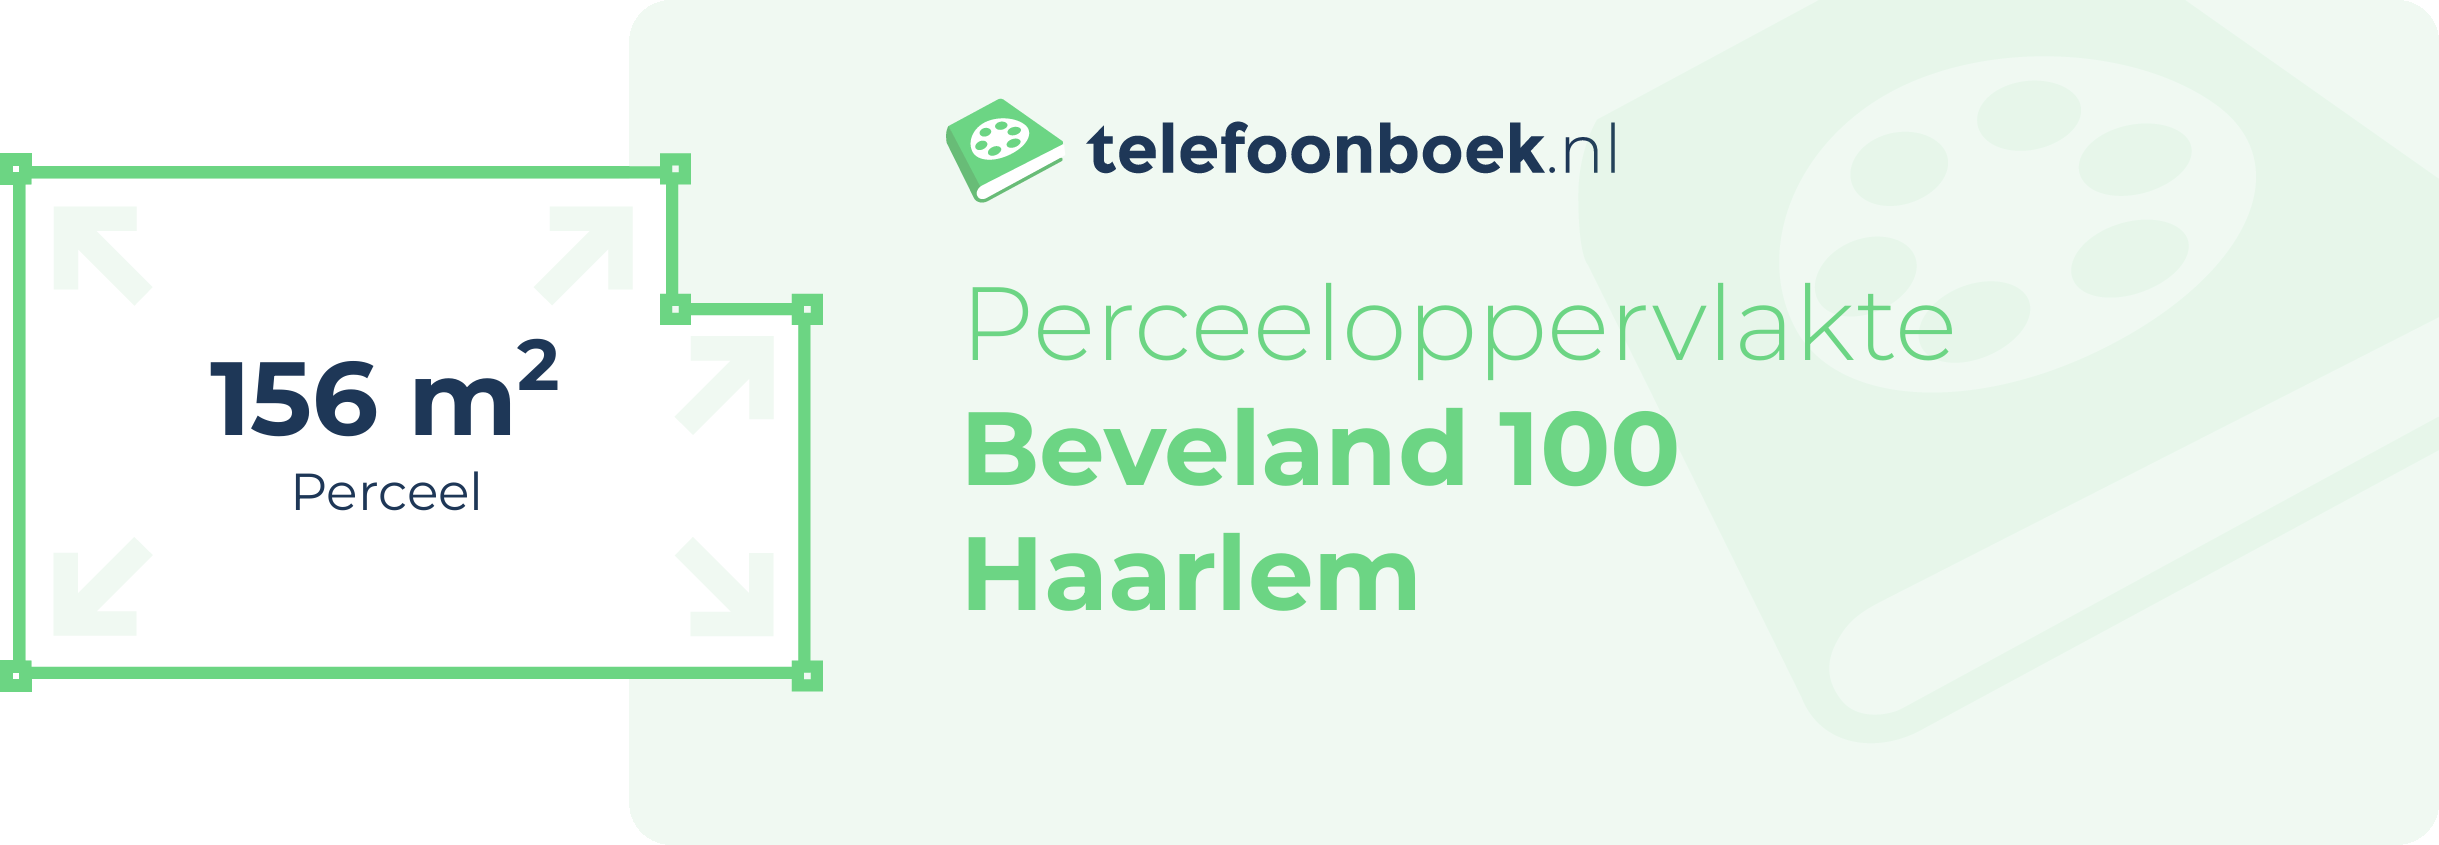 Perceeloppervlakte Beveland 100 Haarlem